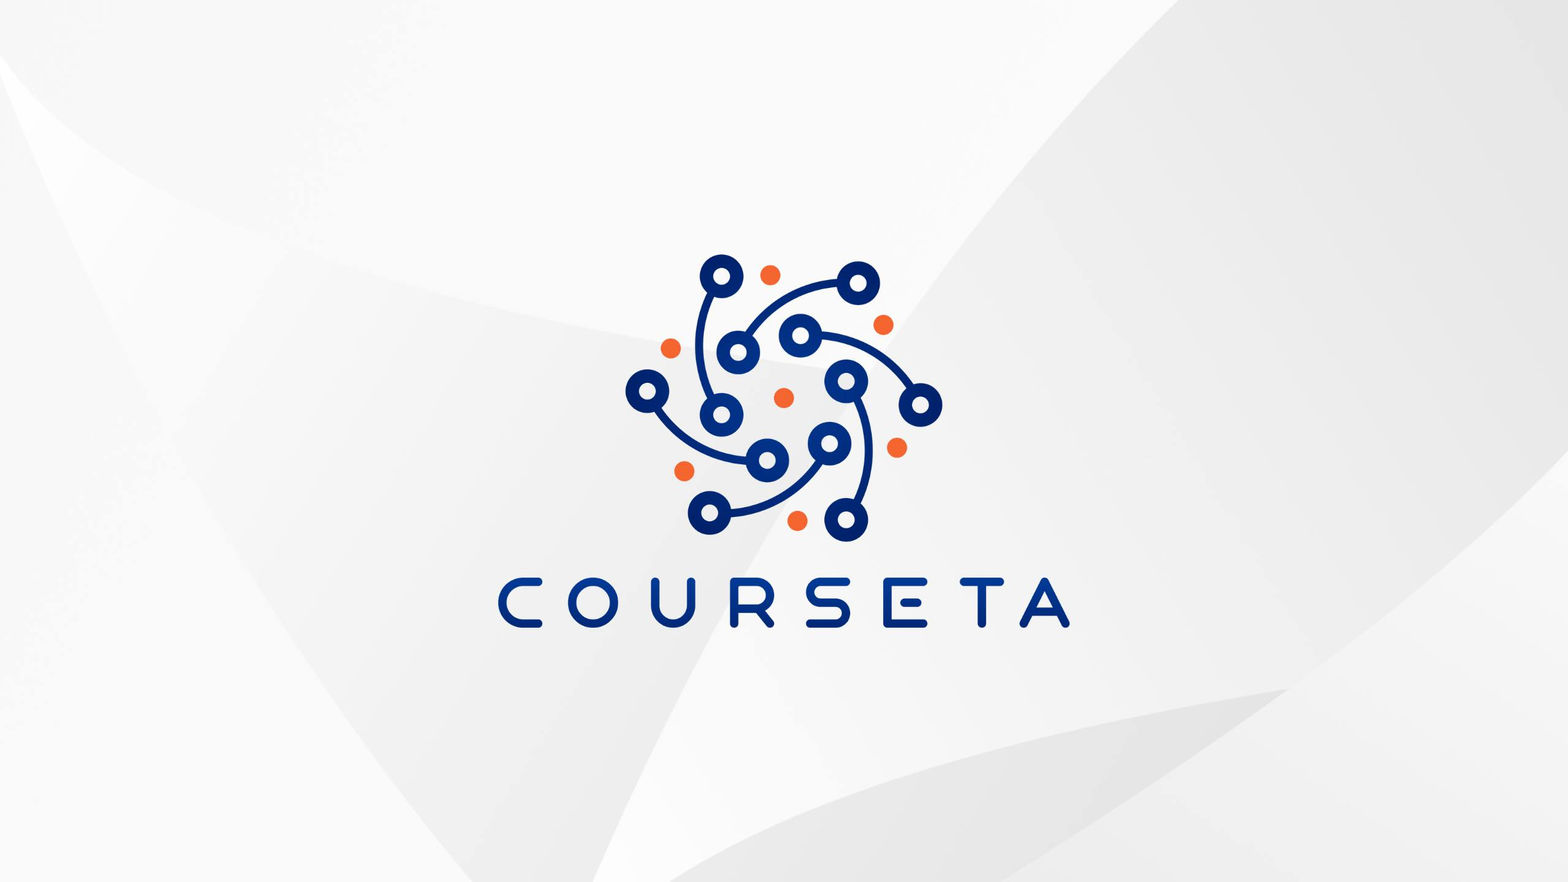 Courseta VR